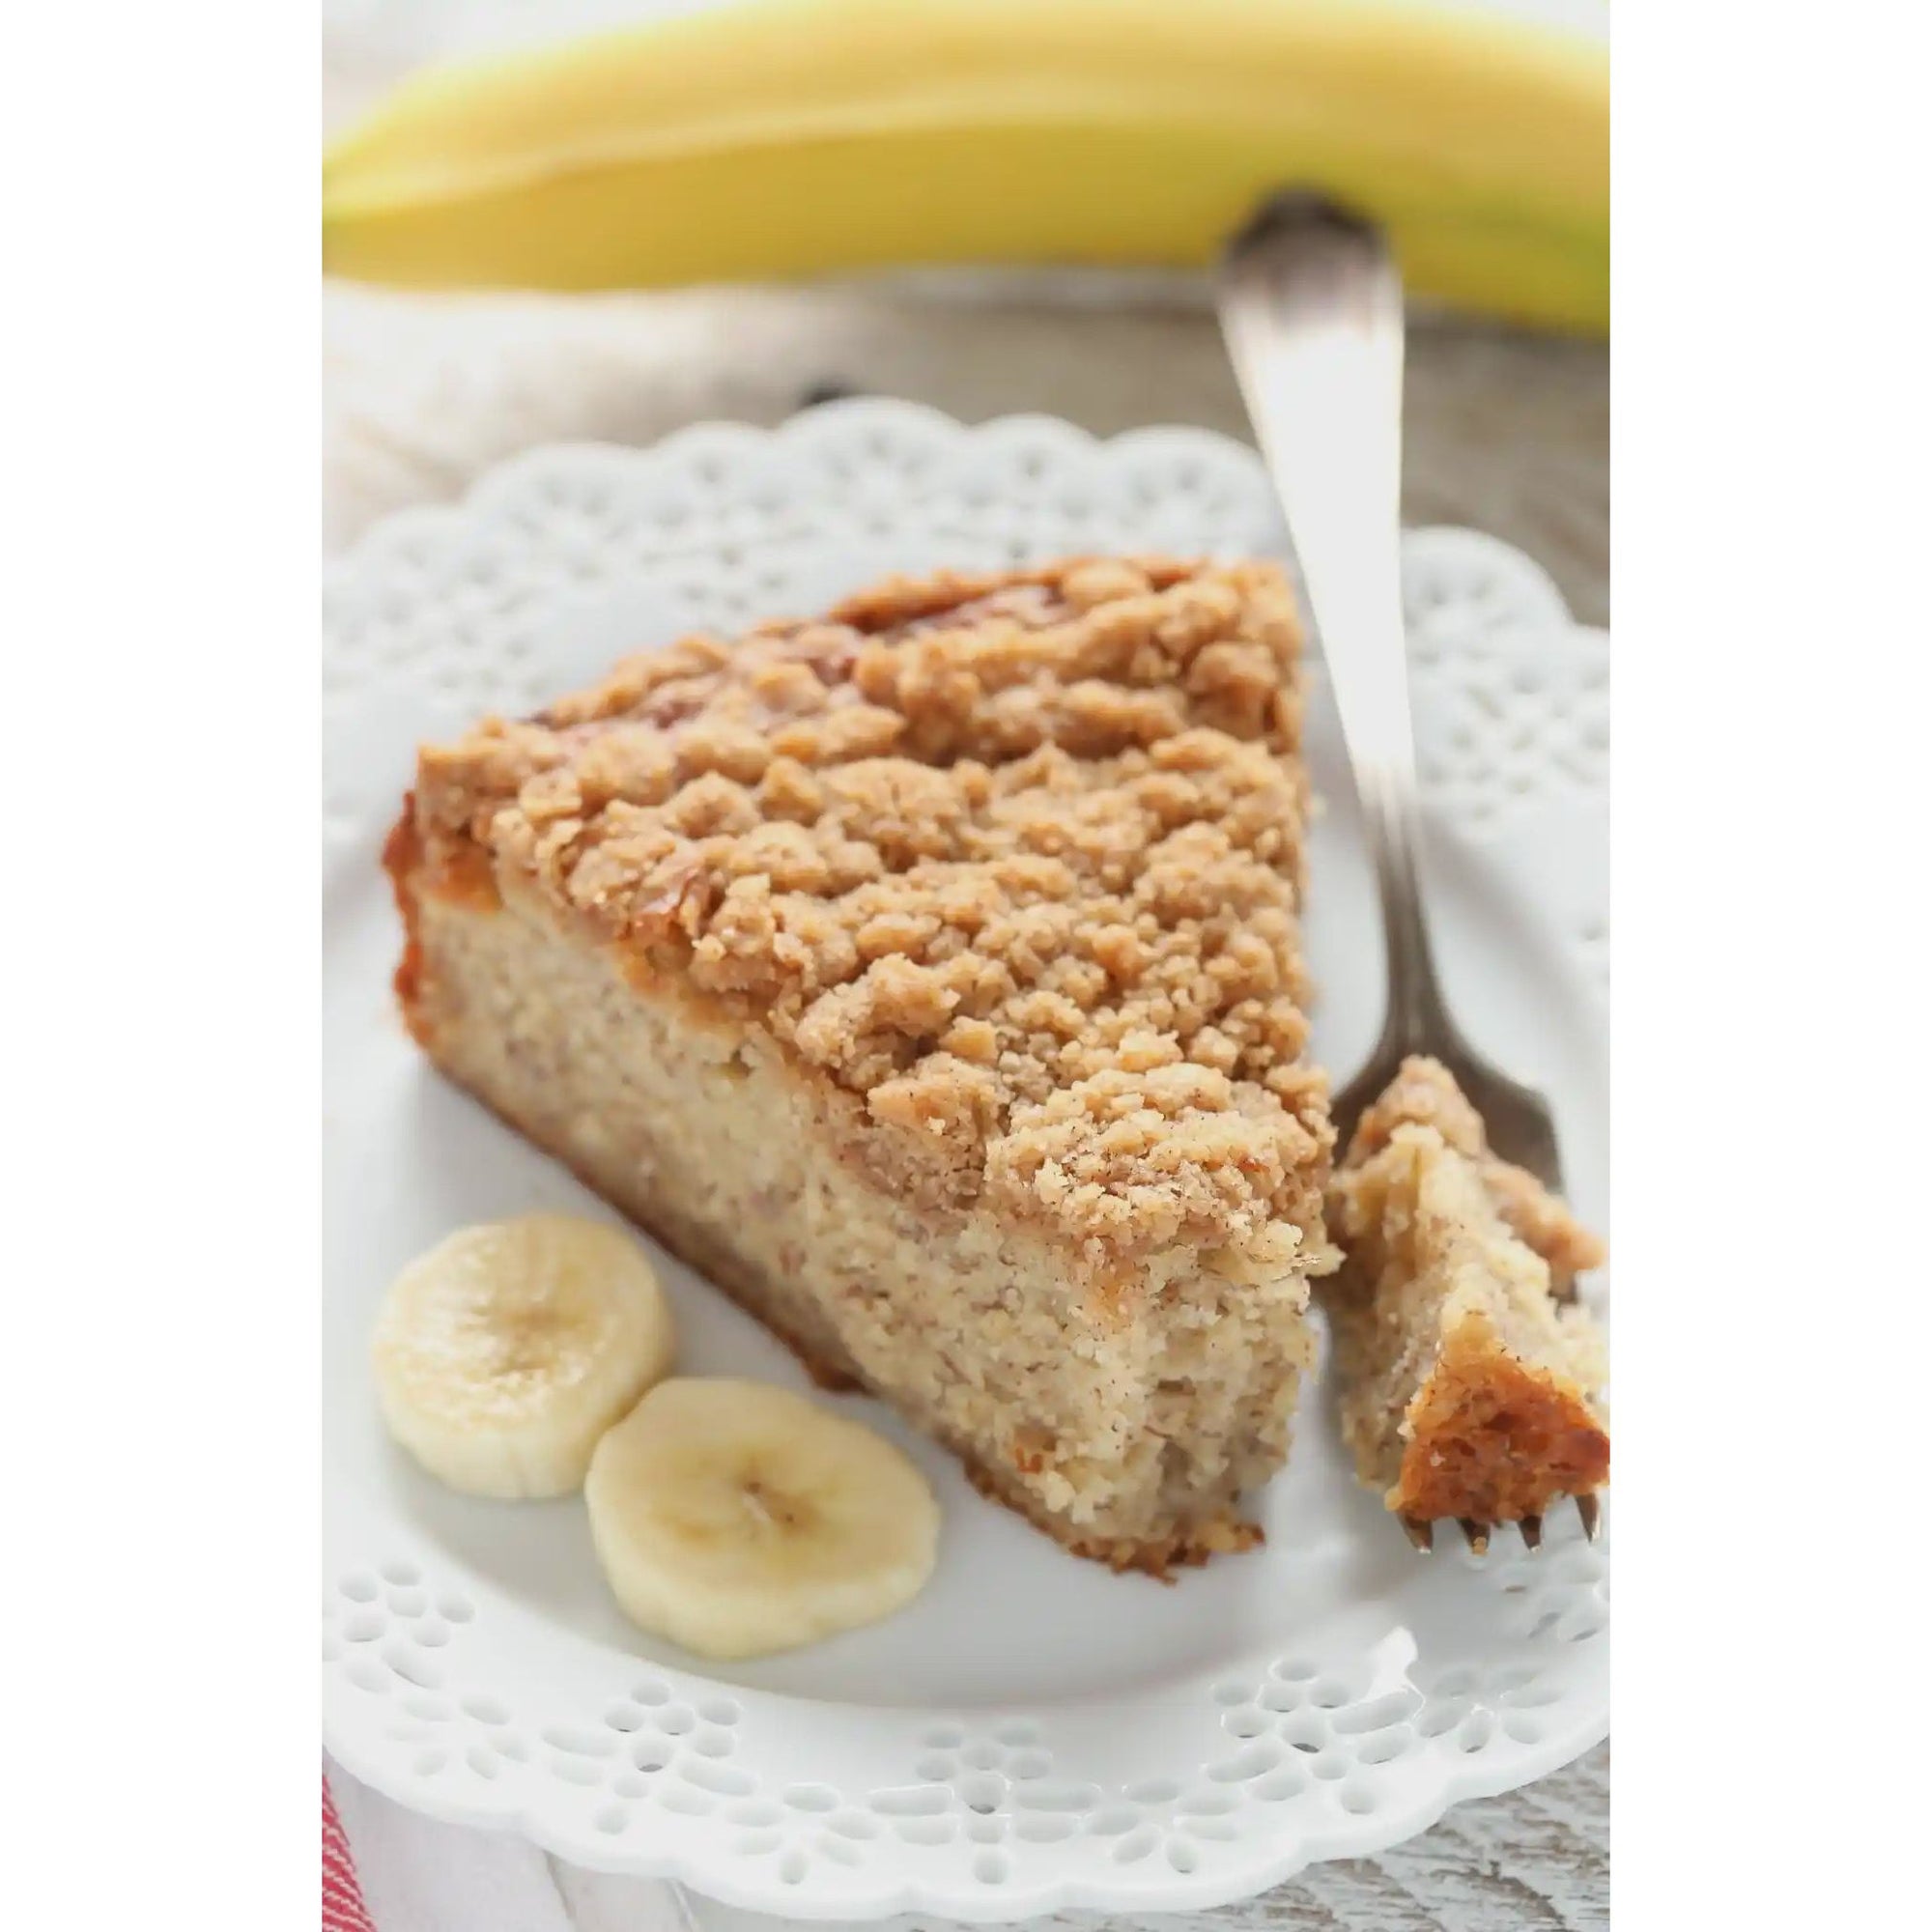 Breakfast Banana Crumb Cake, 9"